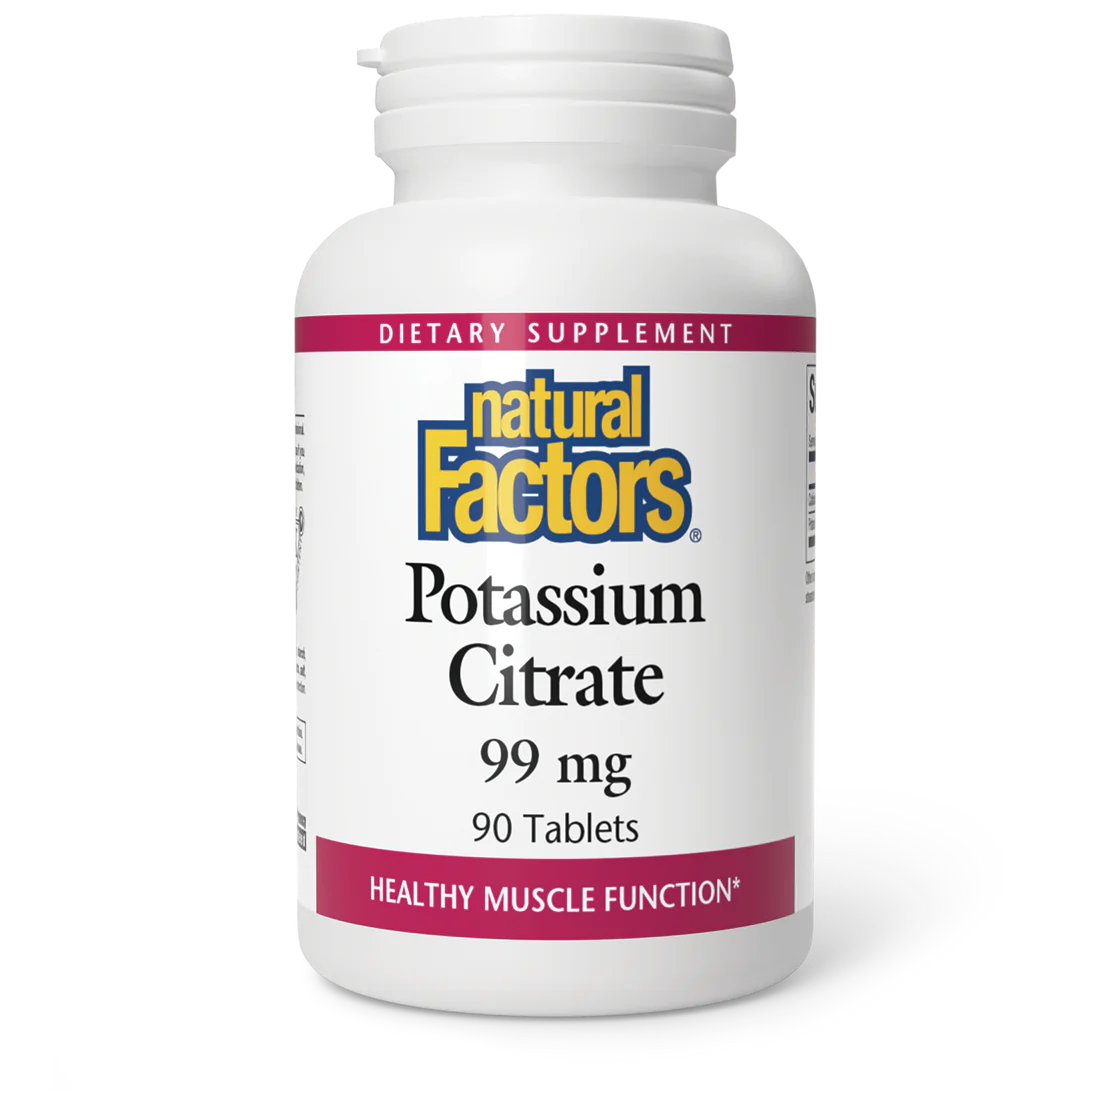 Potassium Citrate by Natural Factors, 90 Tablets 99 mg